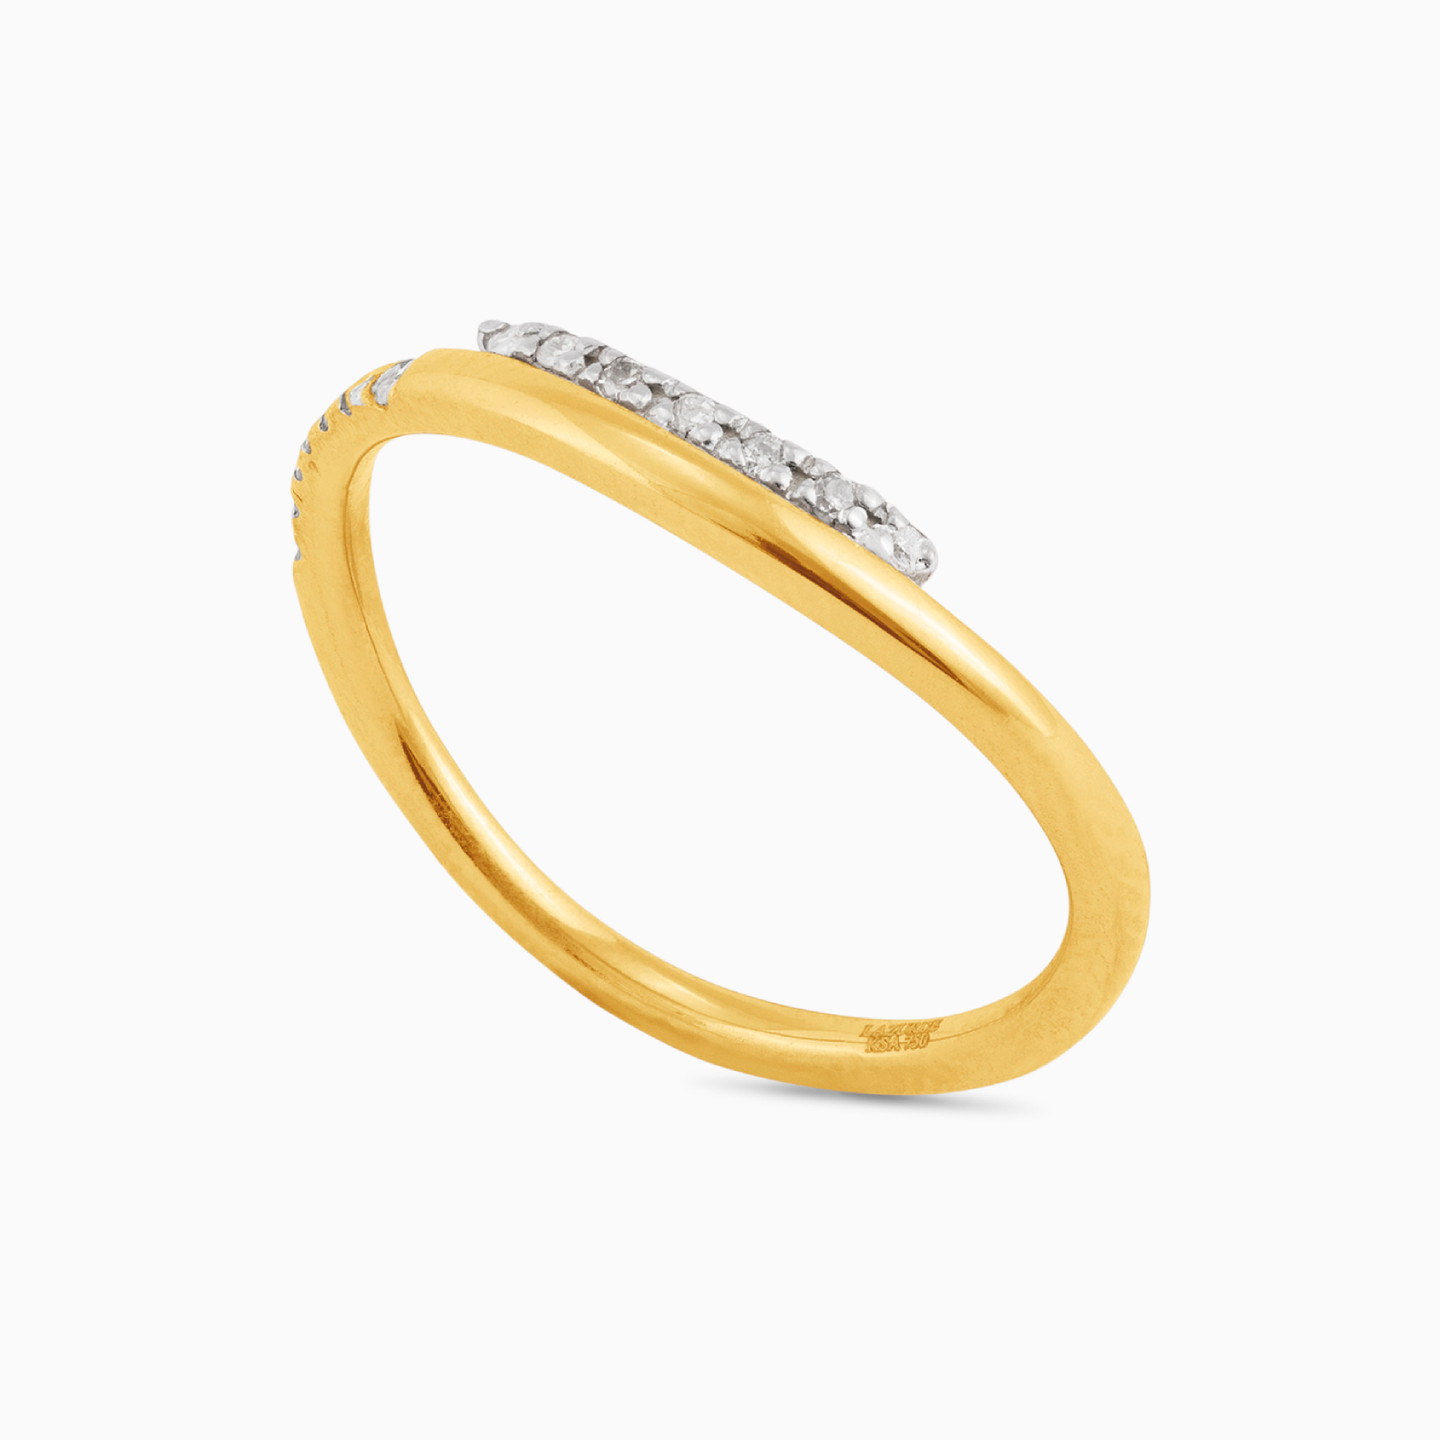 18K Gold Diamond Statement Ring - 2